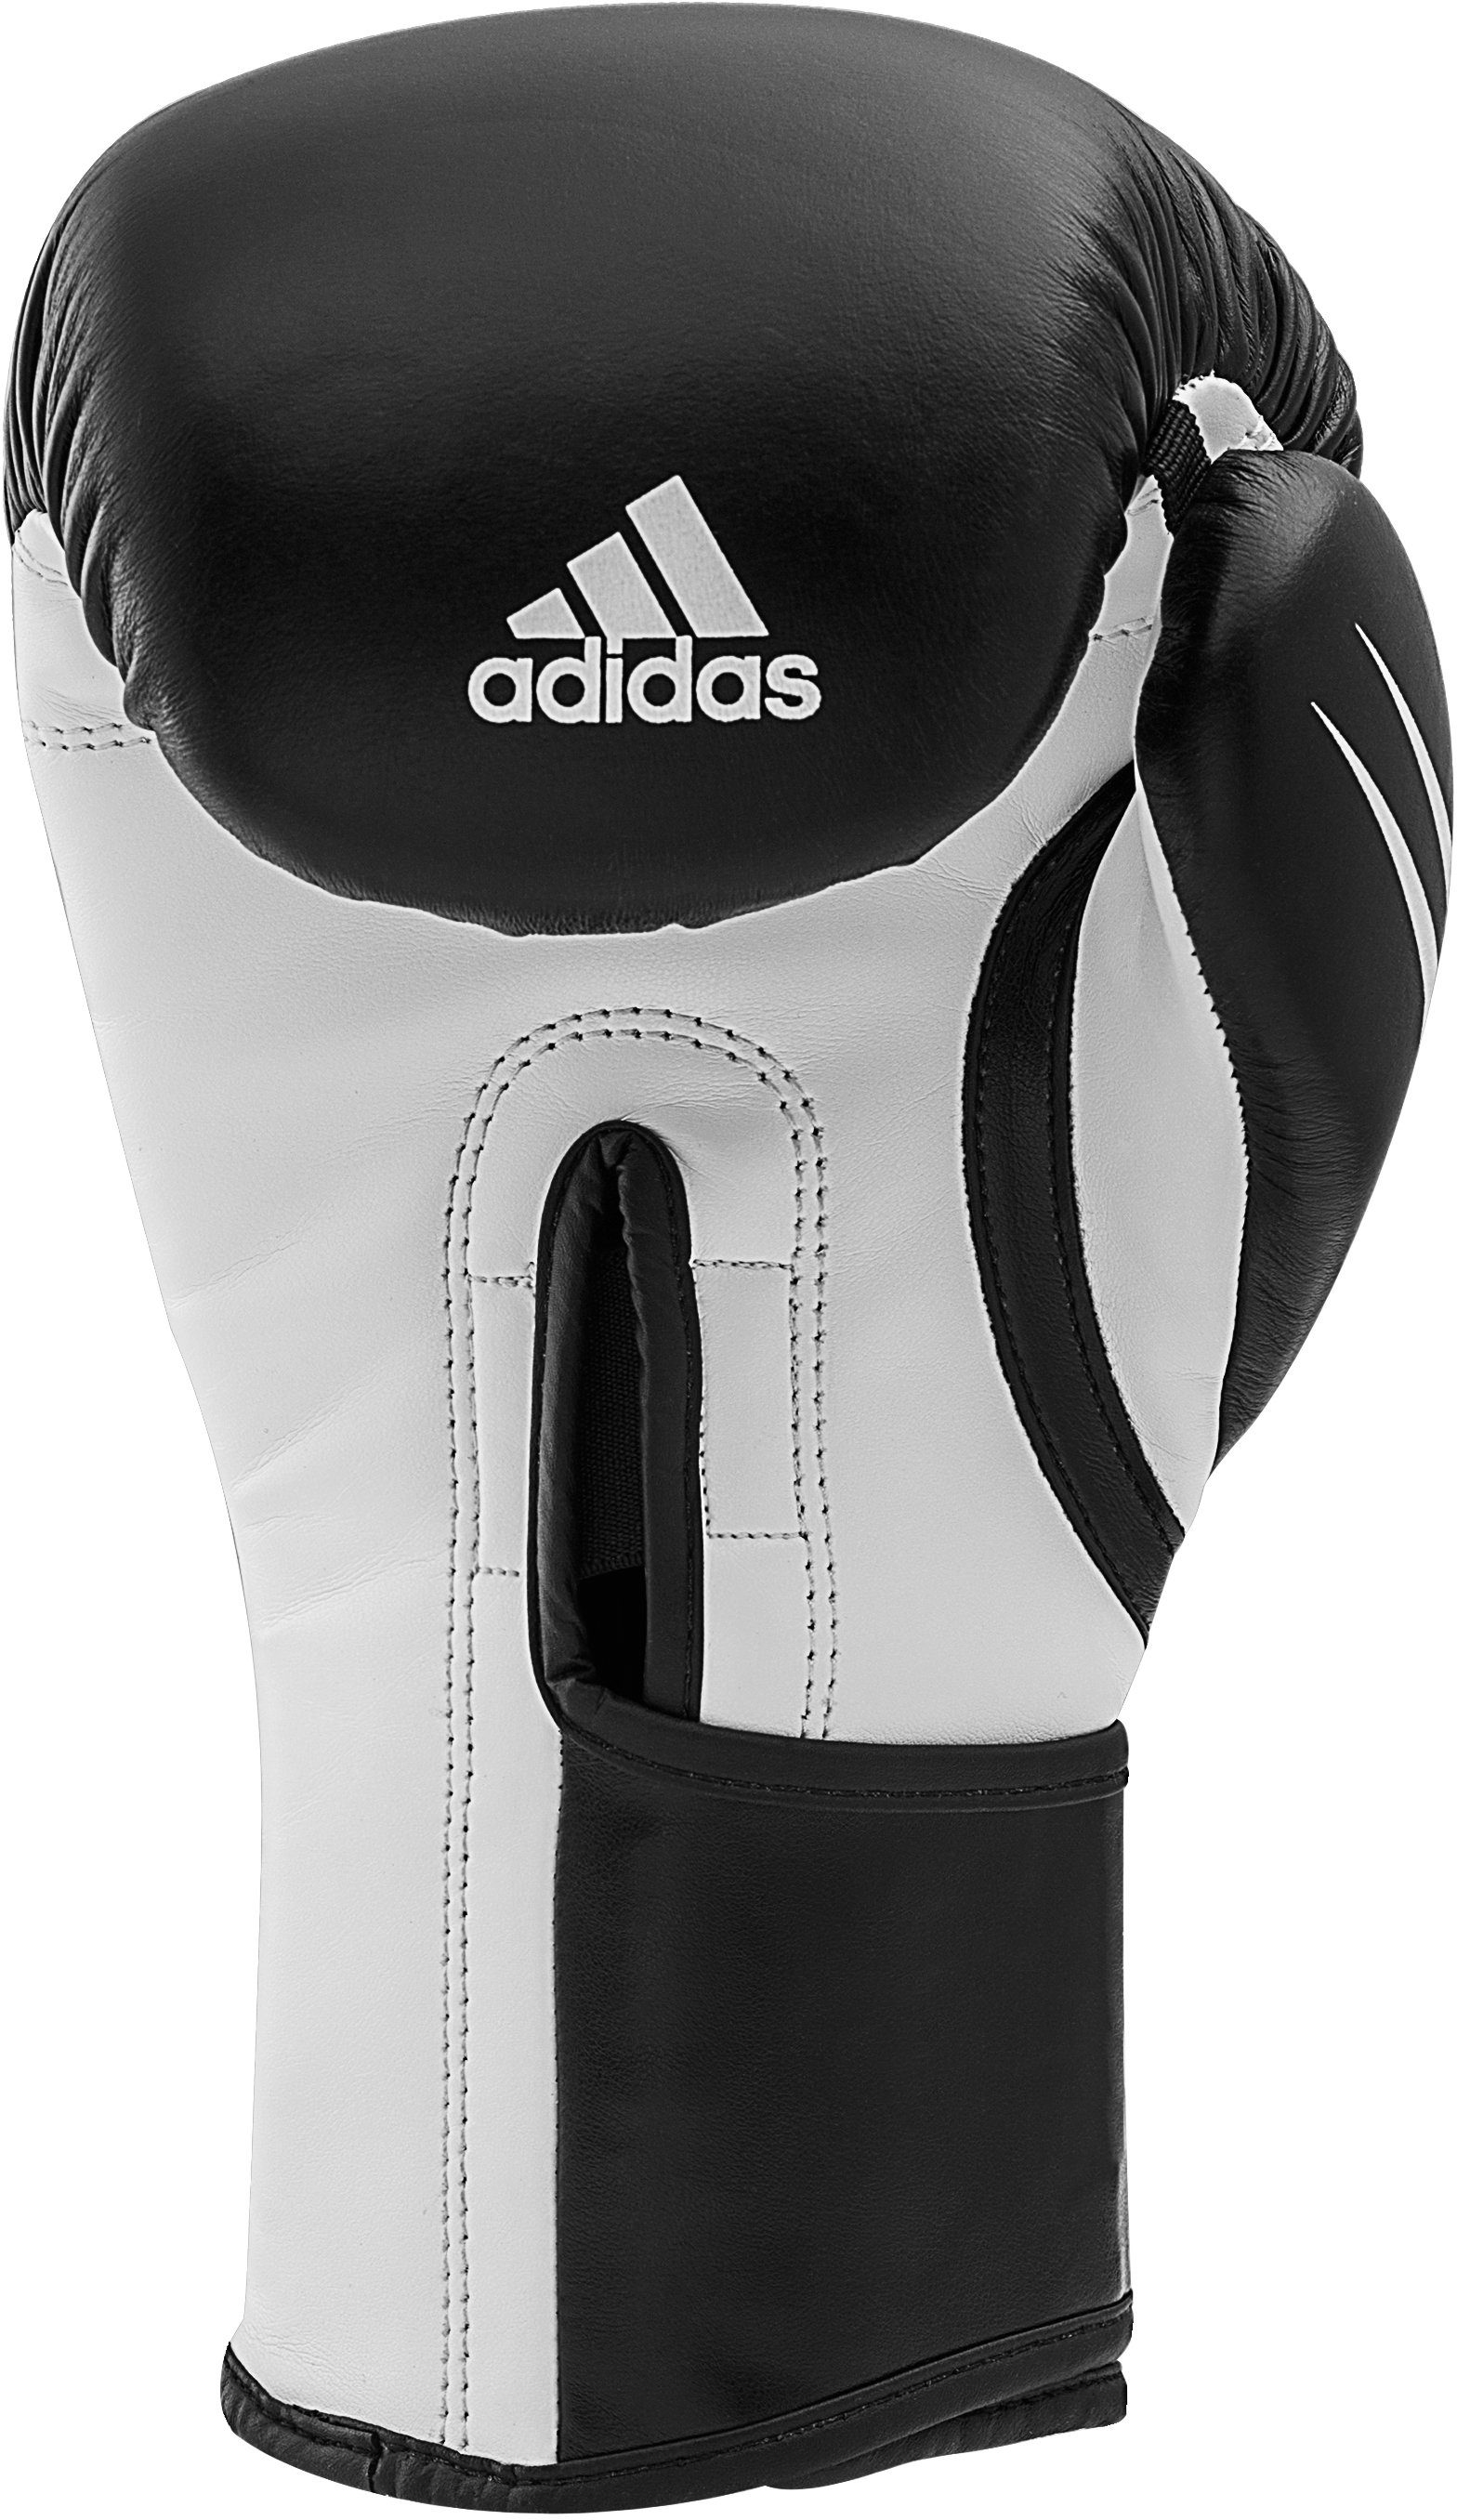 schwarz/weiß Performance adidas Boxhandschuhe